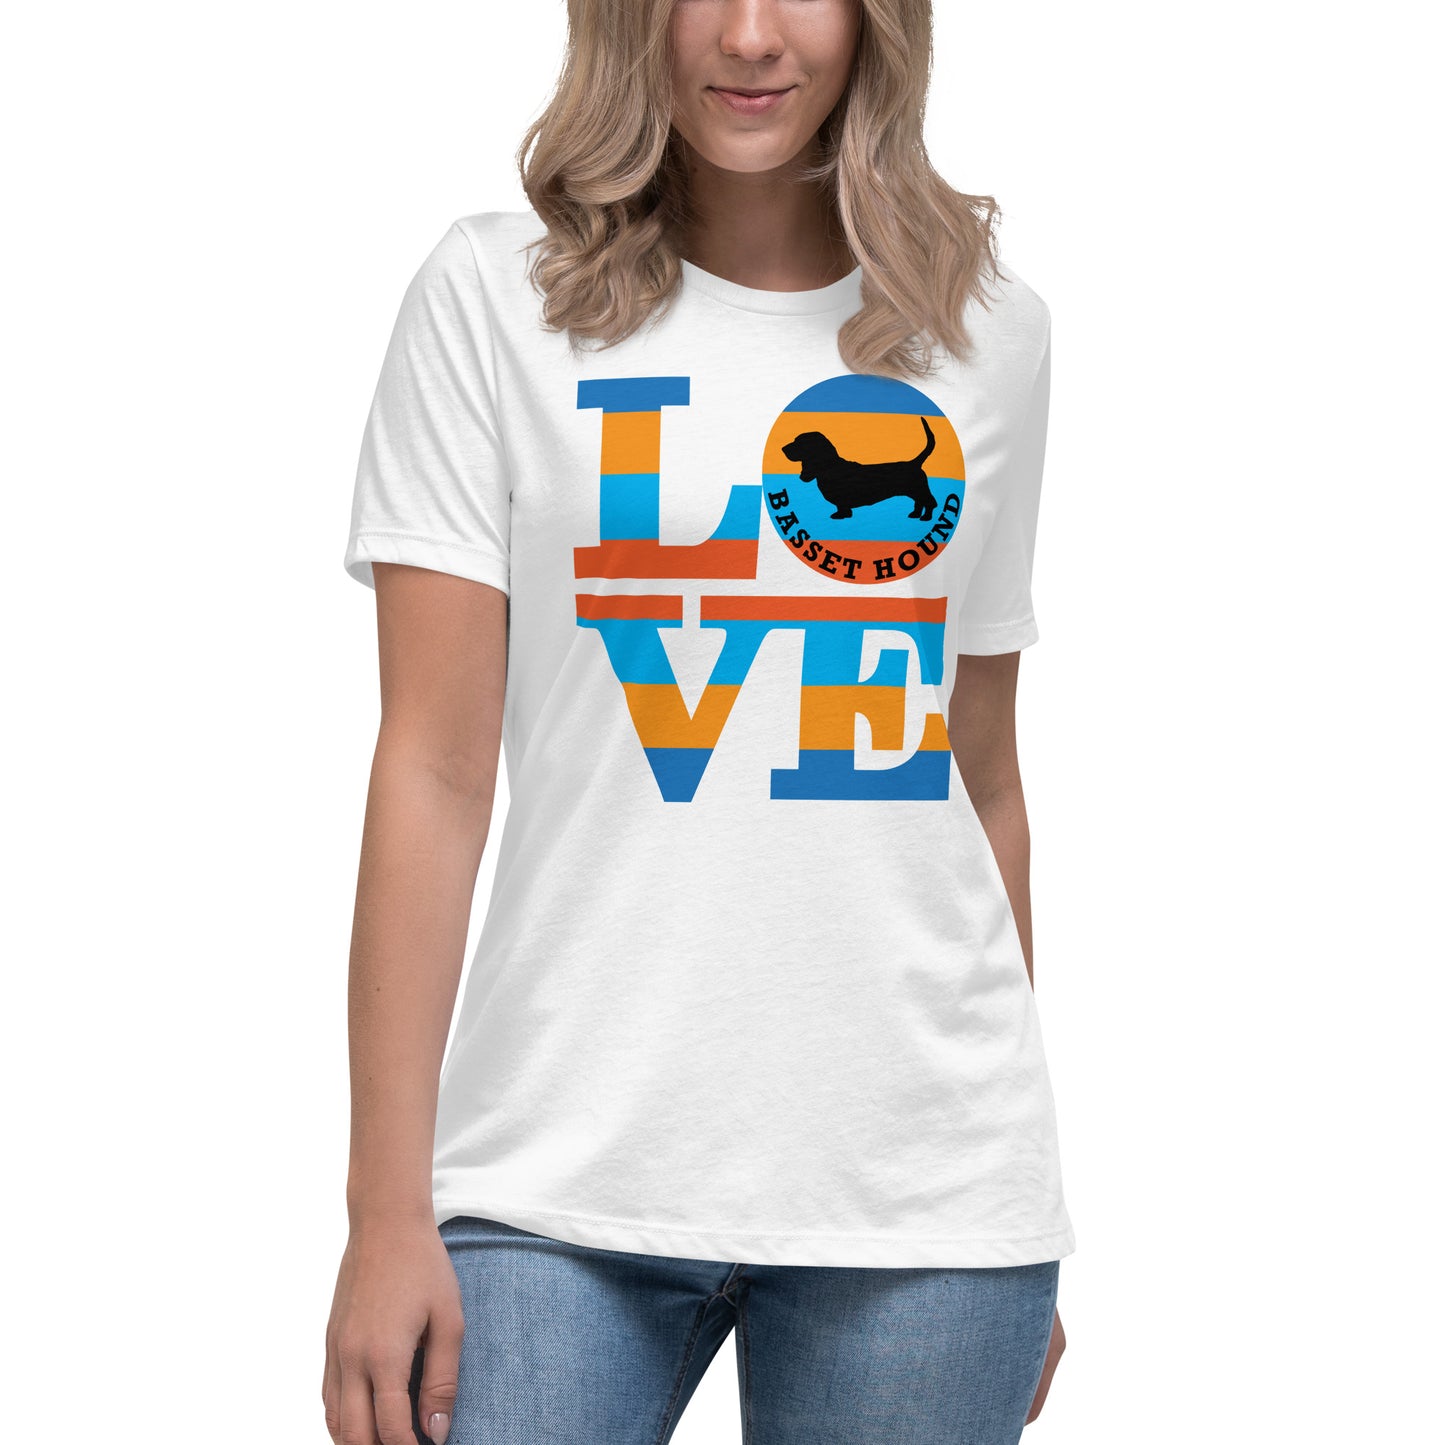 Basset Hound Love women’s white t-shirt by Dog Artistry.